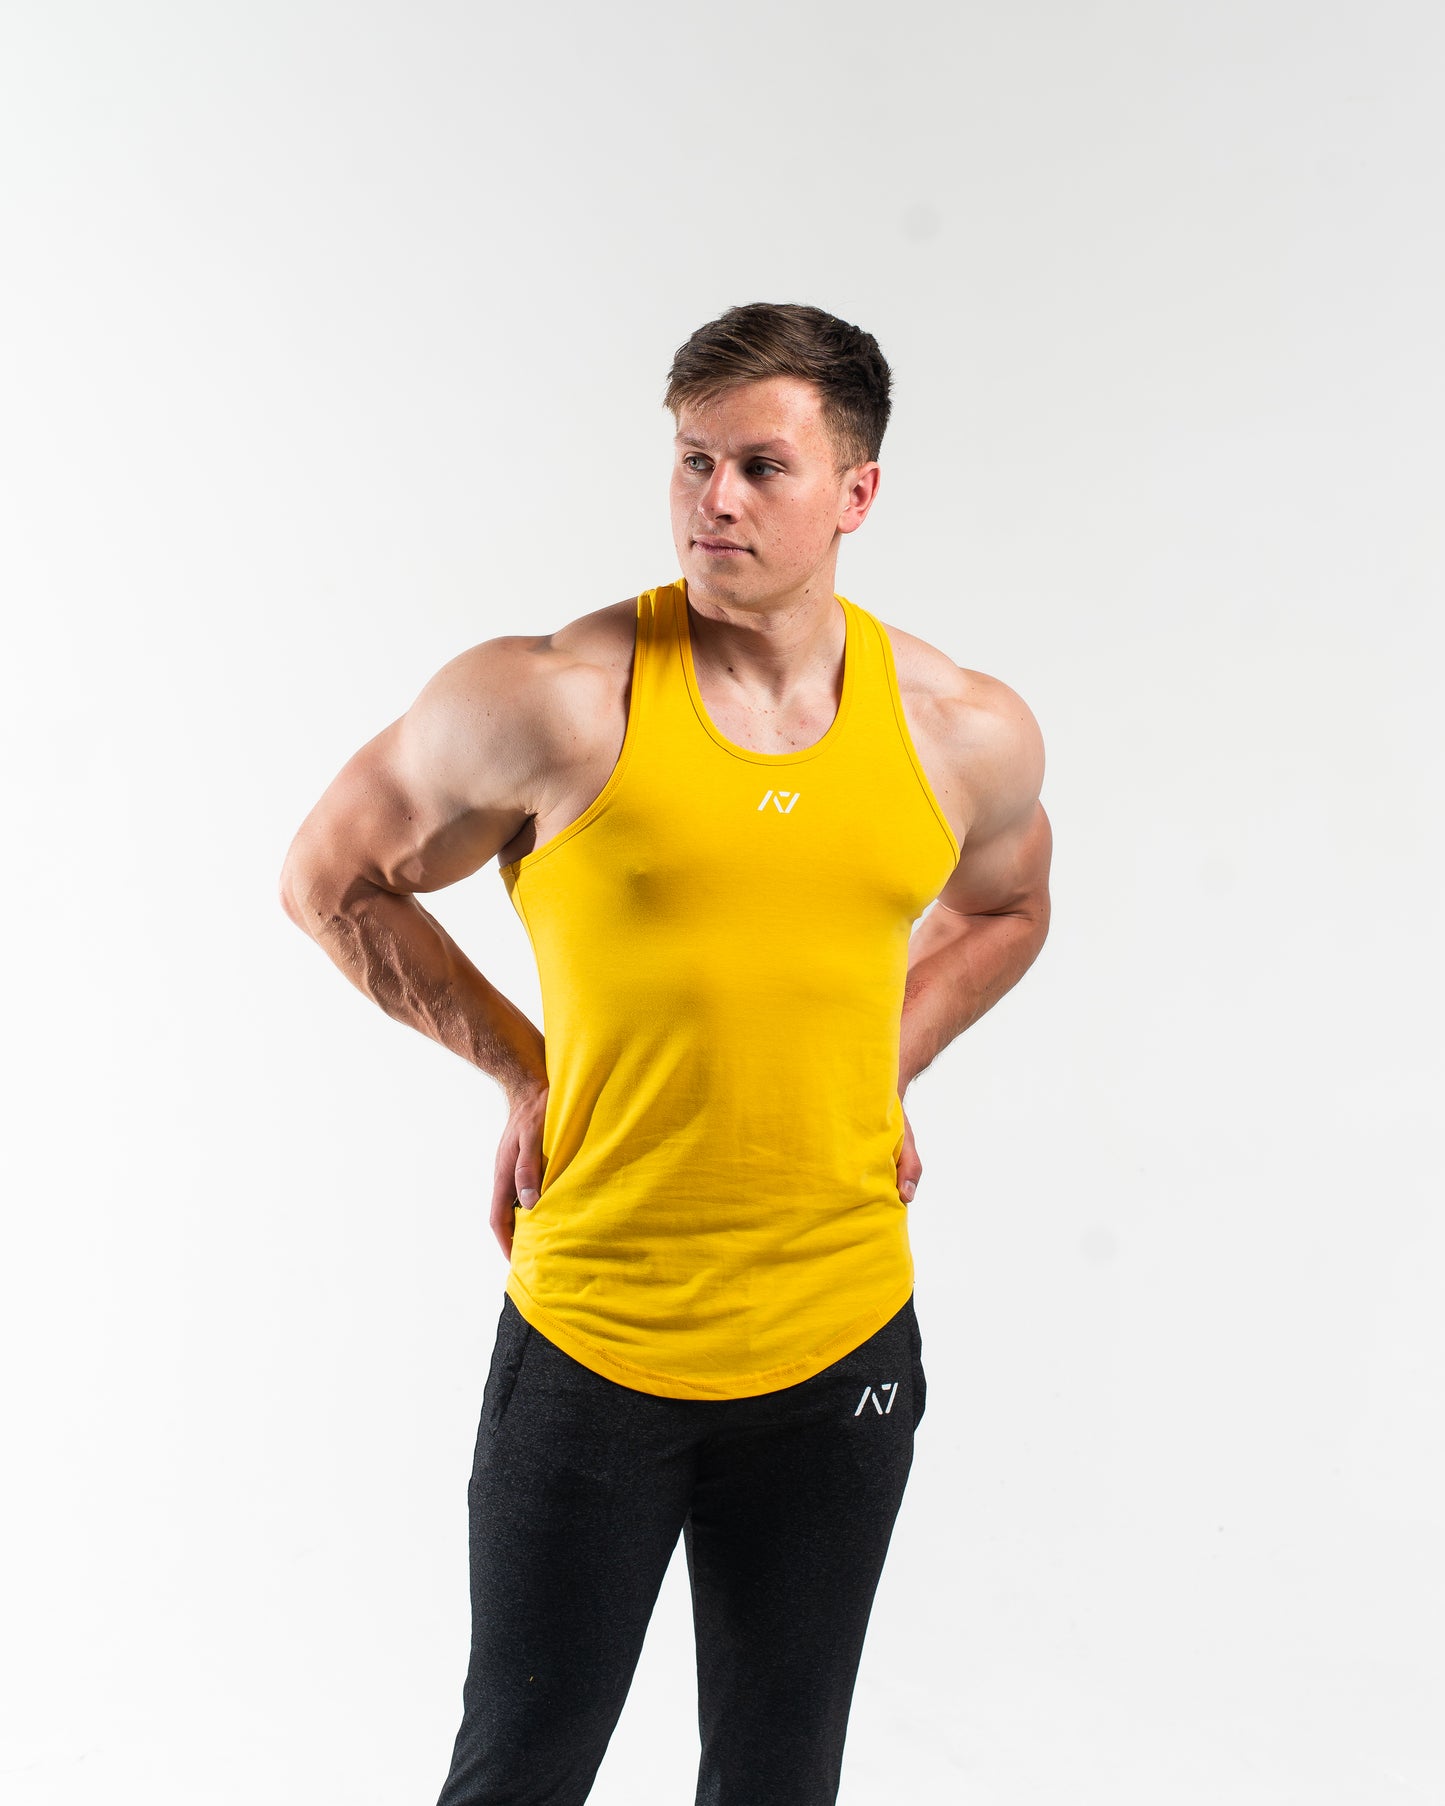 Men's Workout Tanks, Men's Sleeveless Workout Shirts